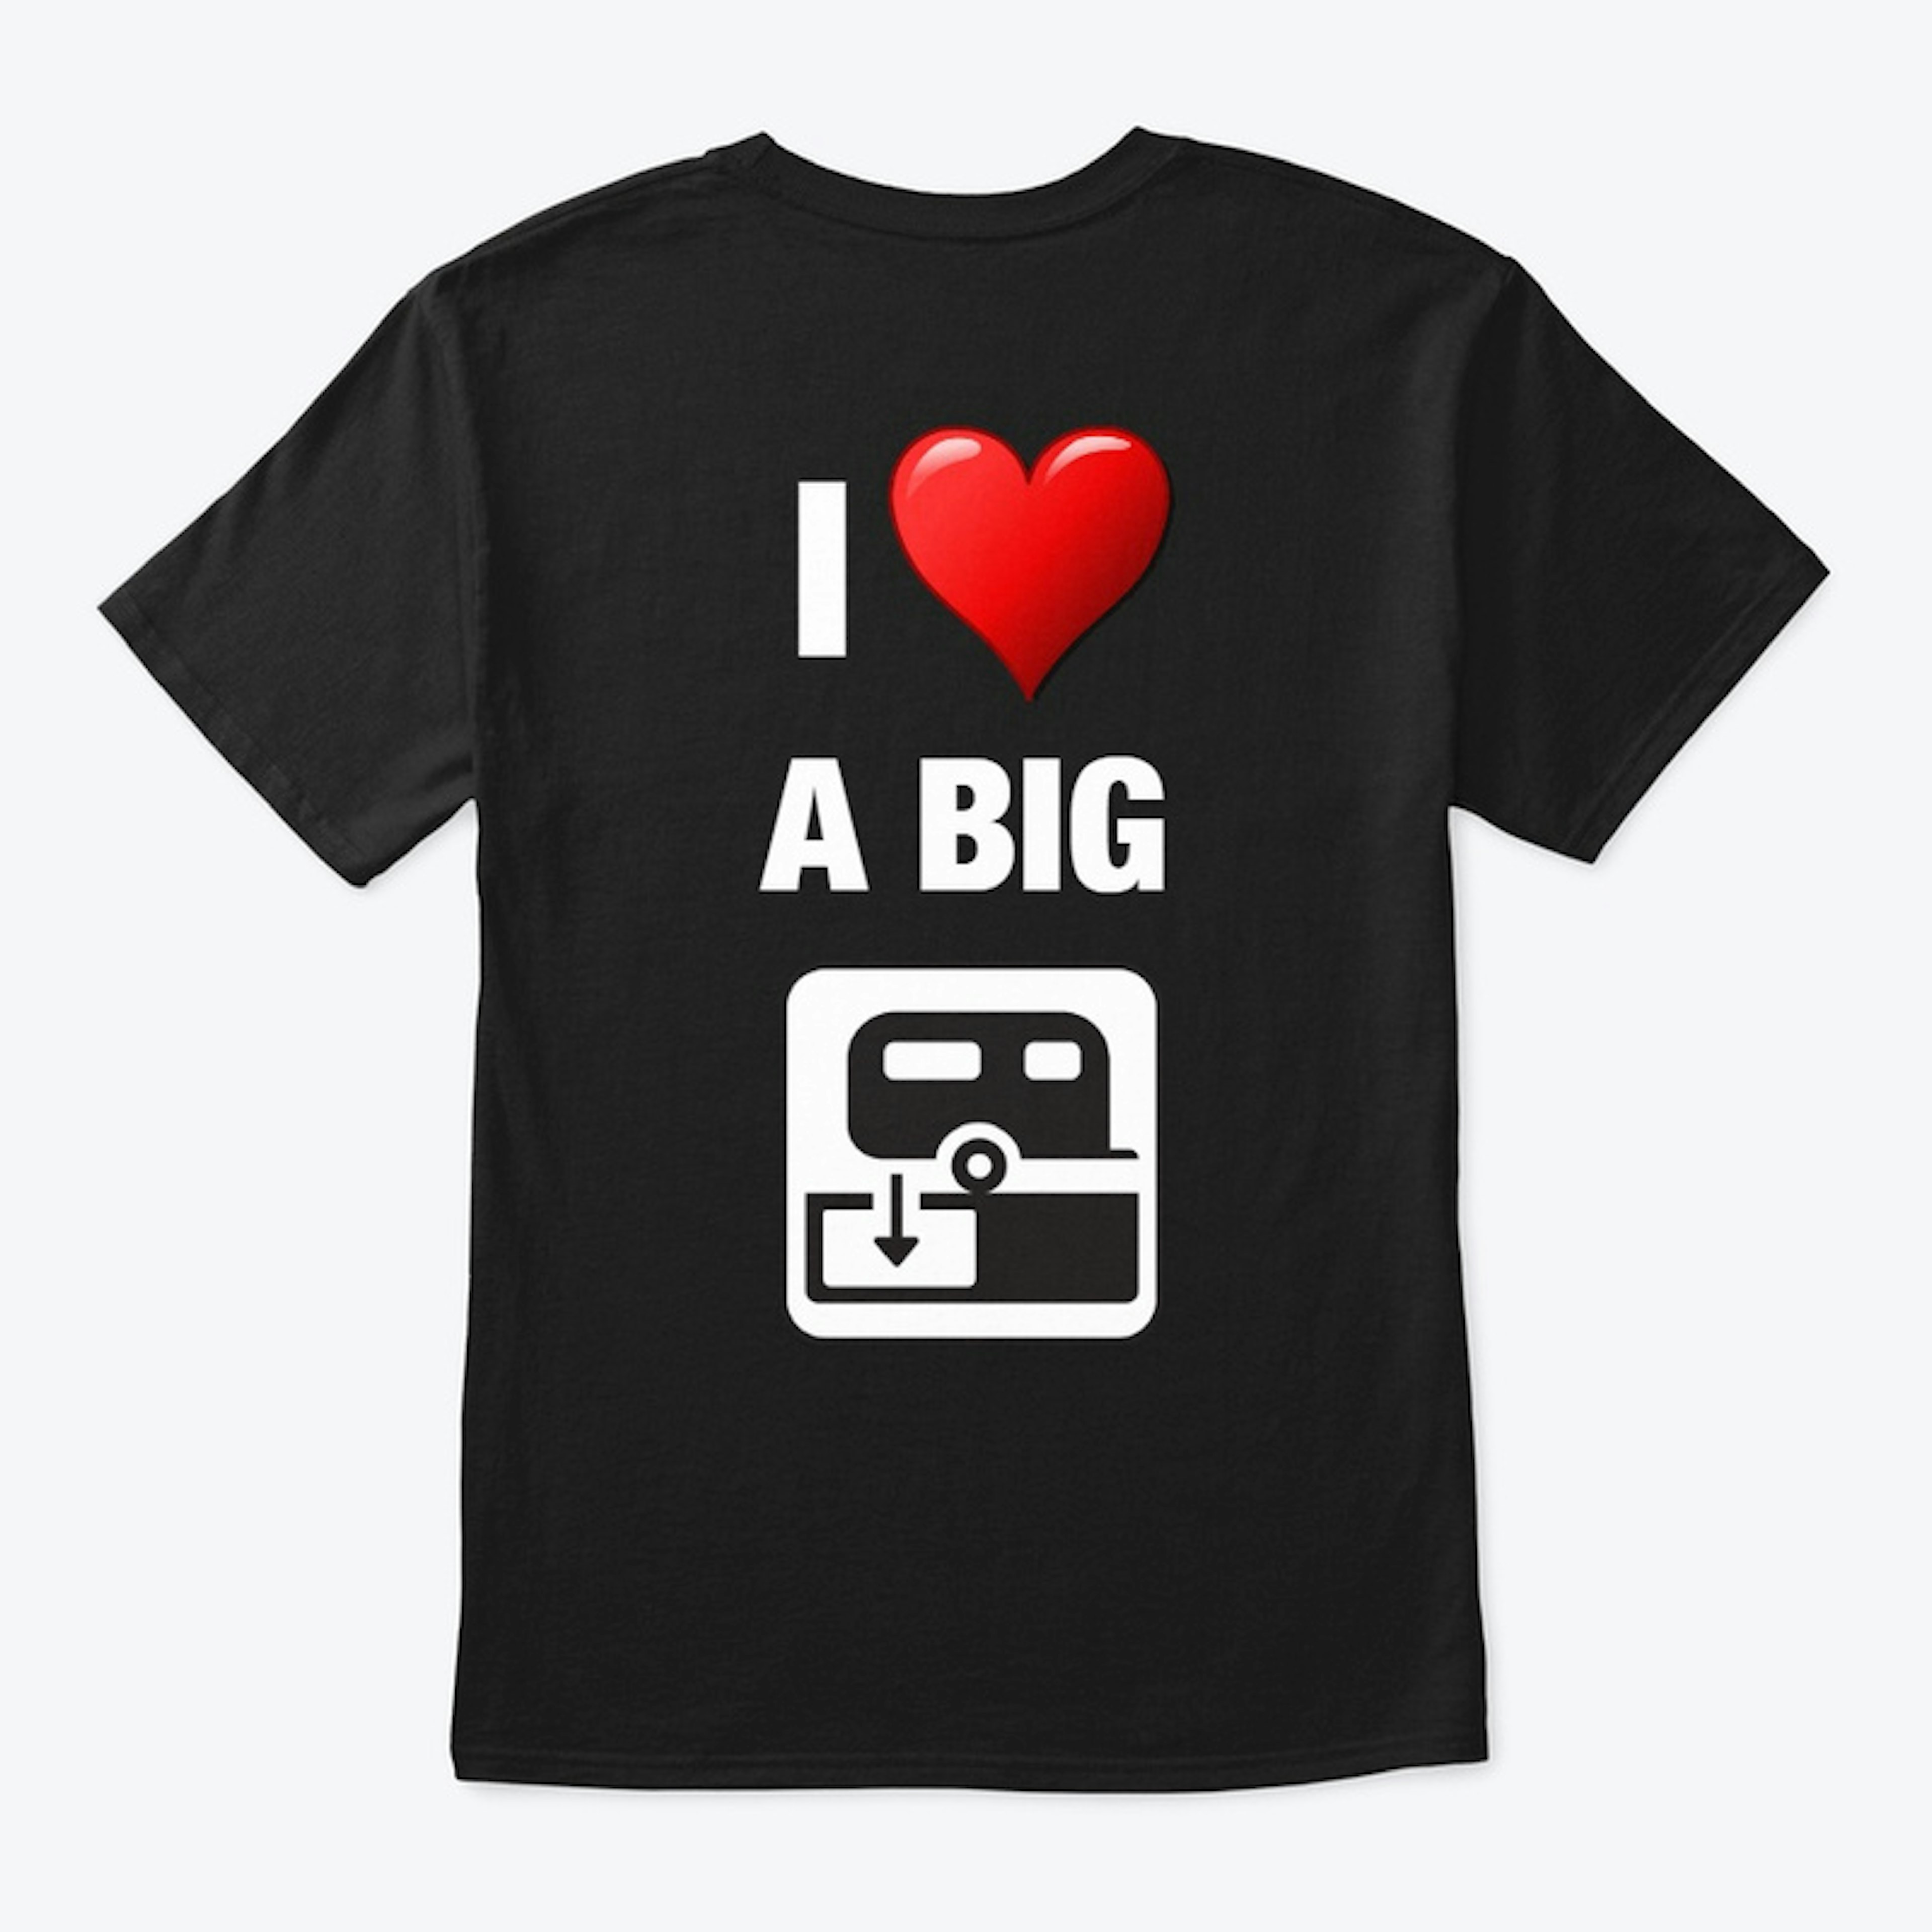 "I Love a Big Dump" RV camping logo Tee